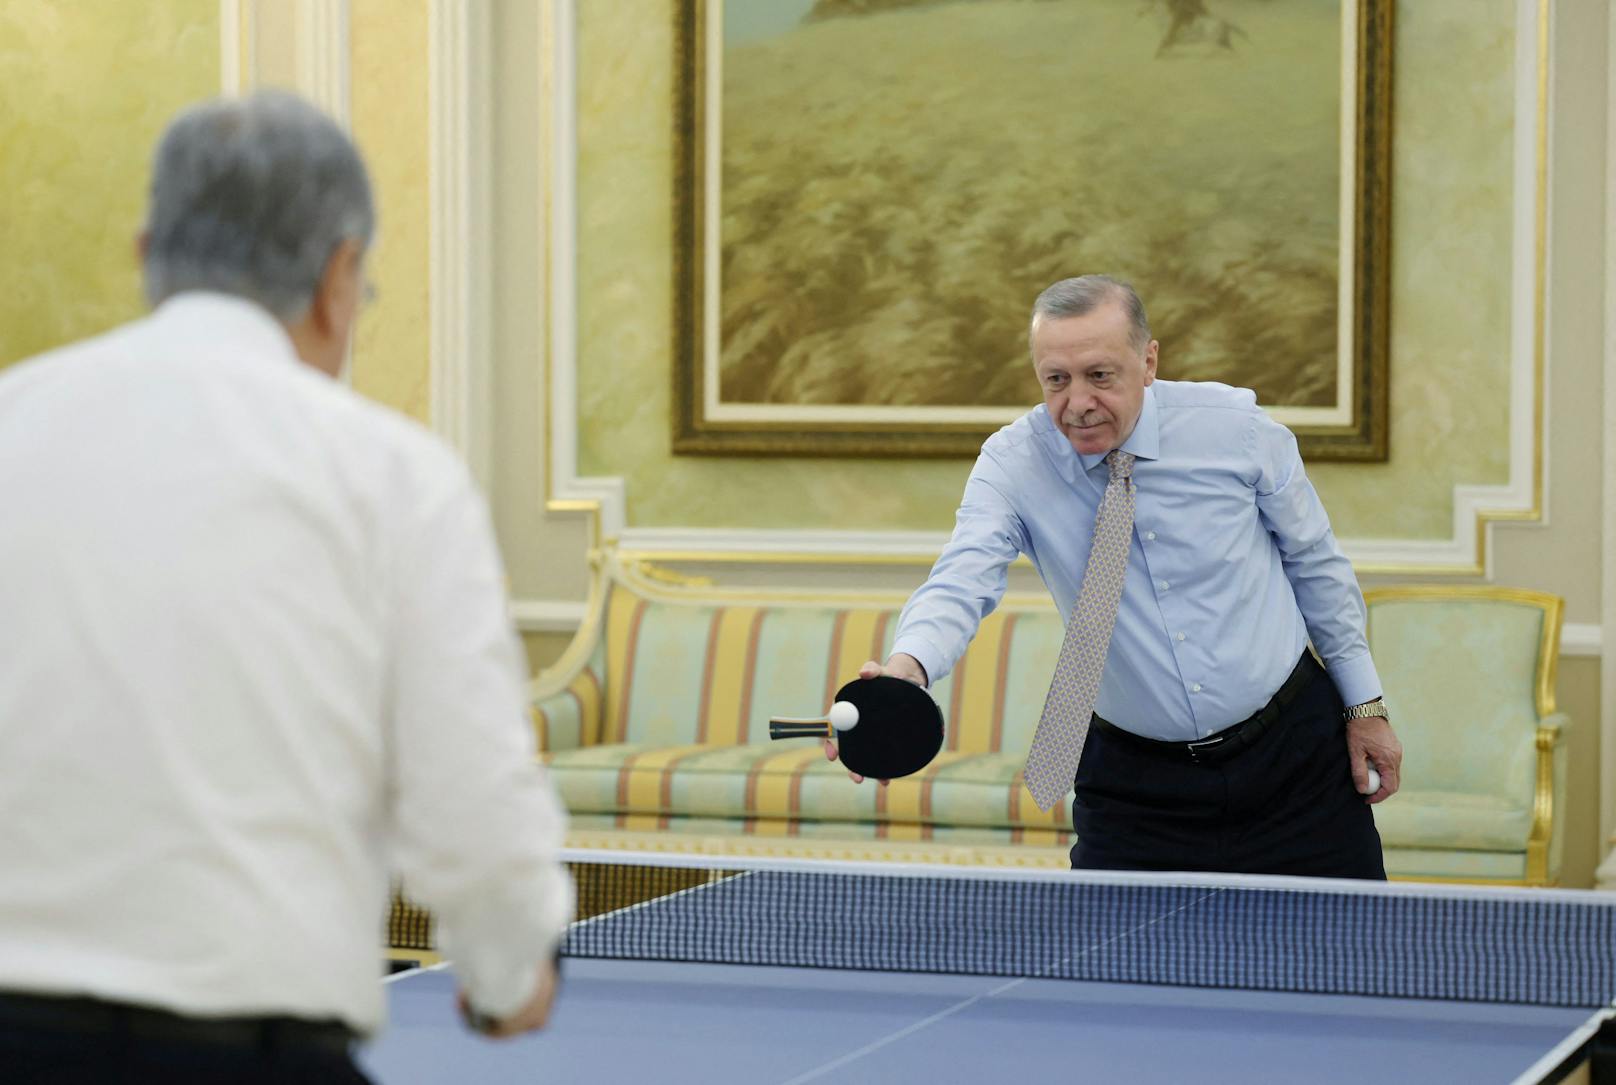 Denn der Türken-Präsident hielt das Schlagholz verkehrt.&nbsp;